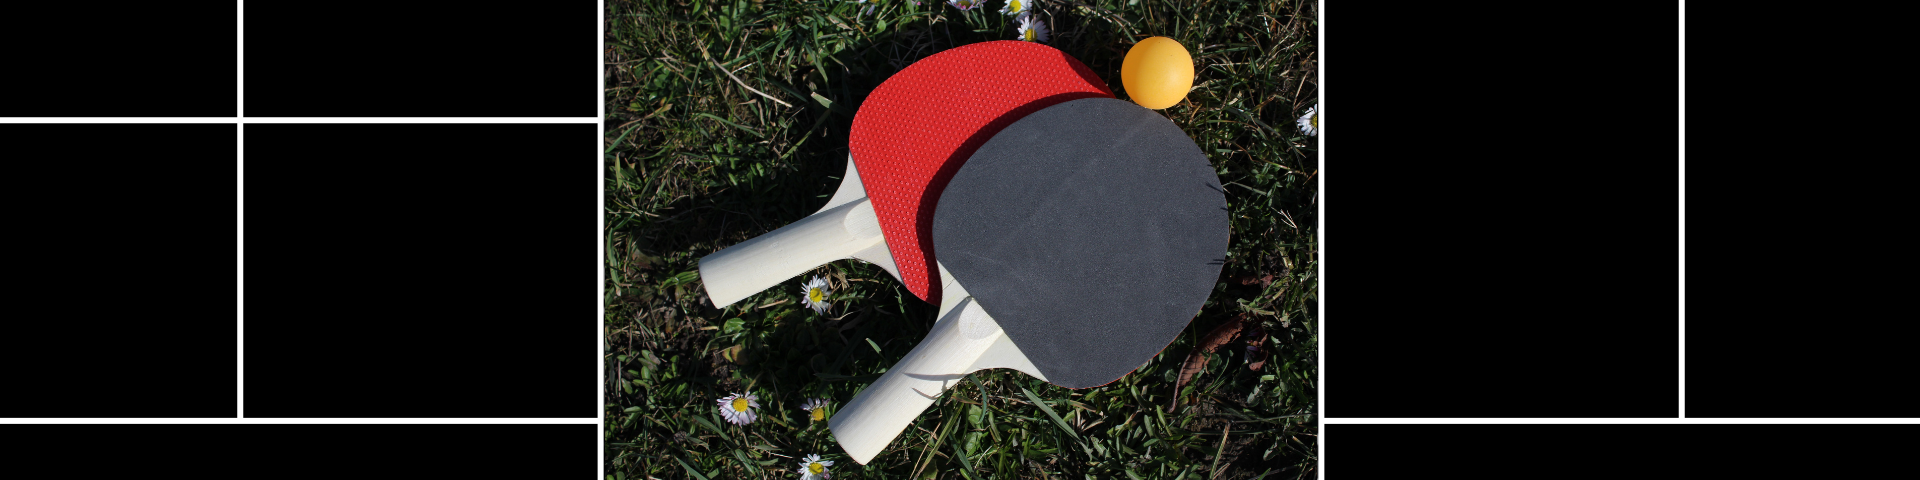 Table tennis equipment (Ping-pong) - Εικόνα